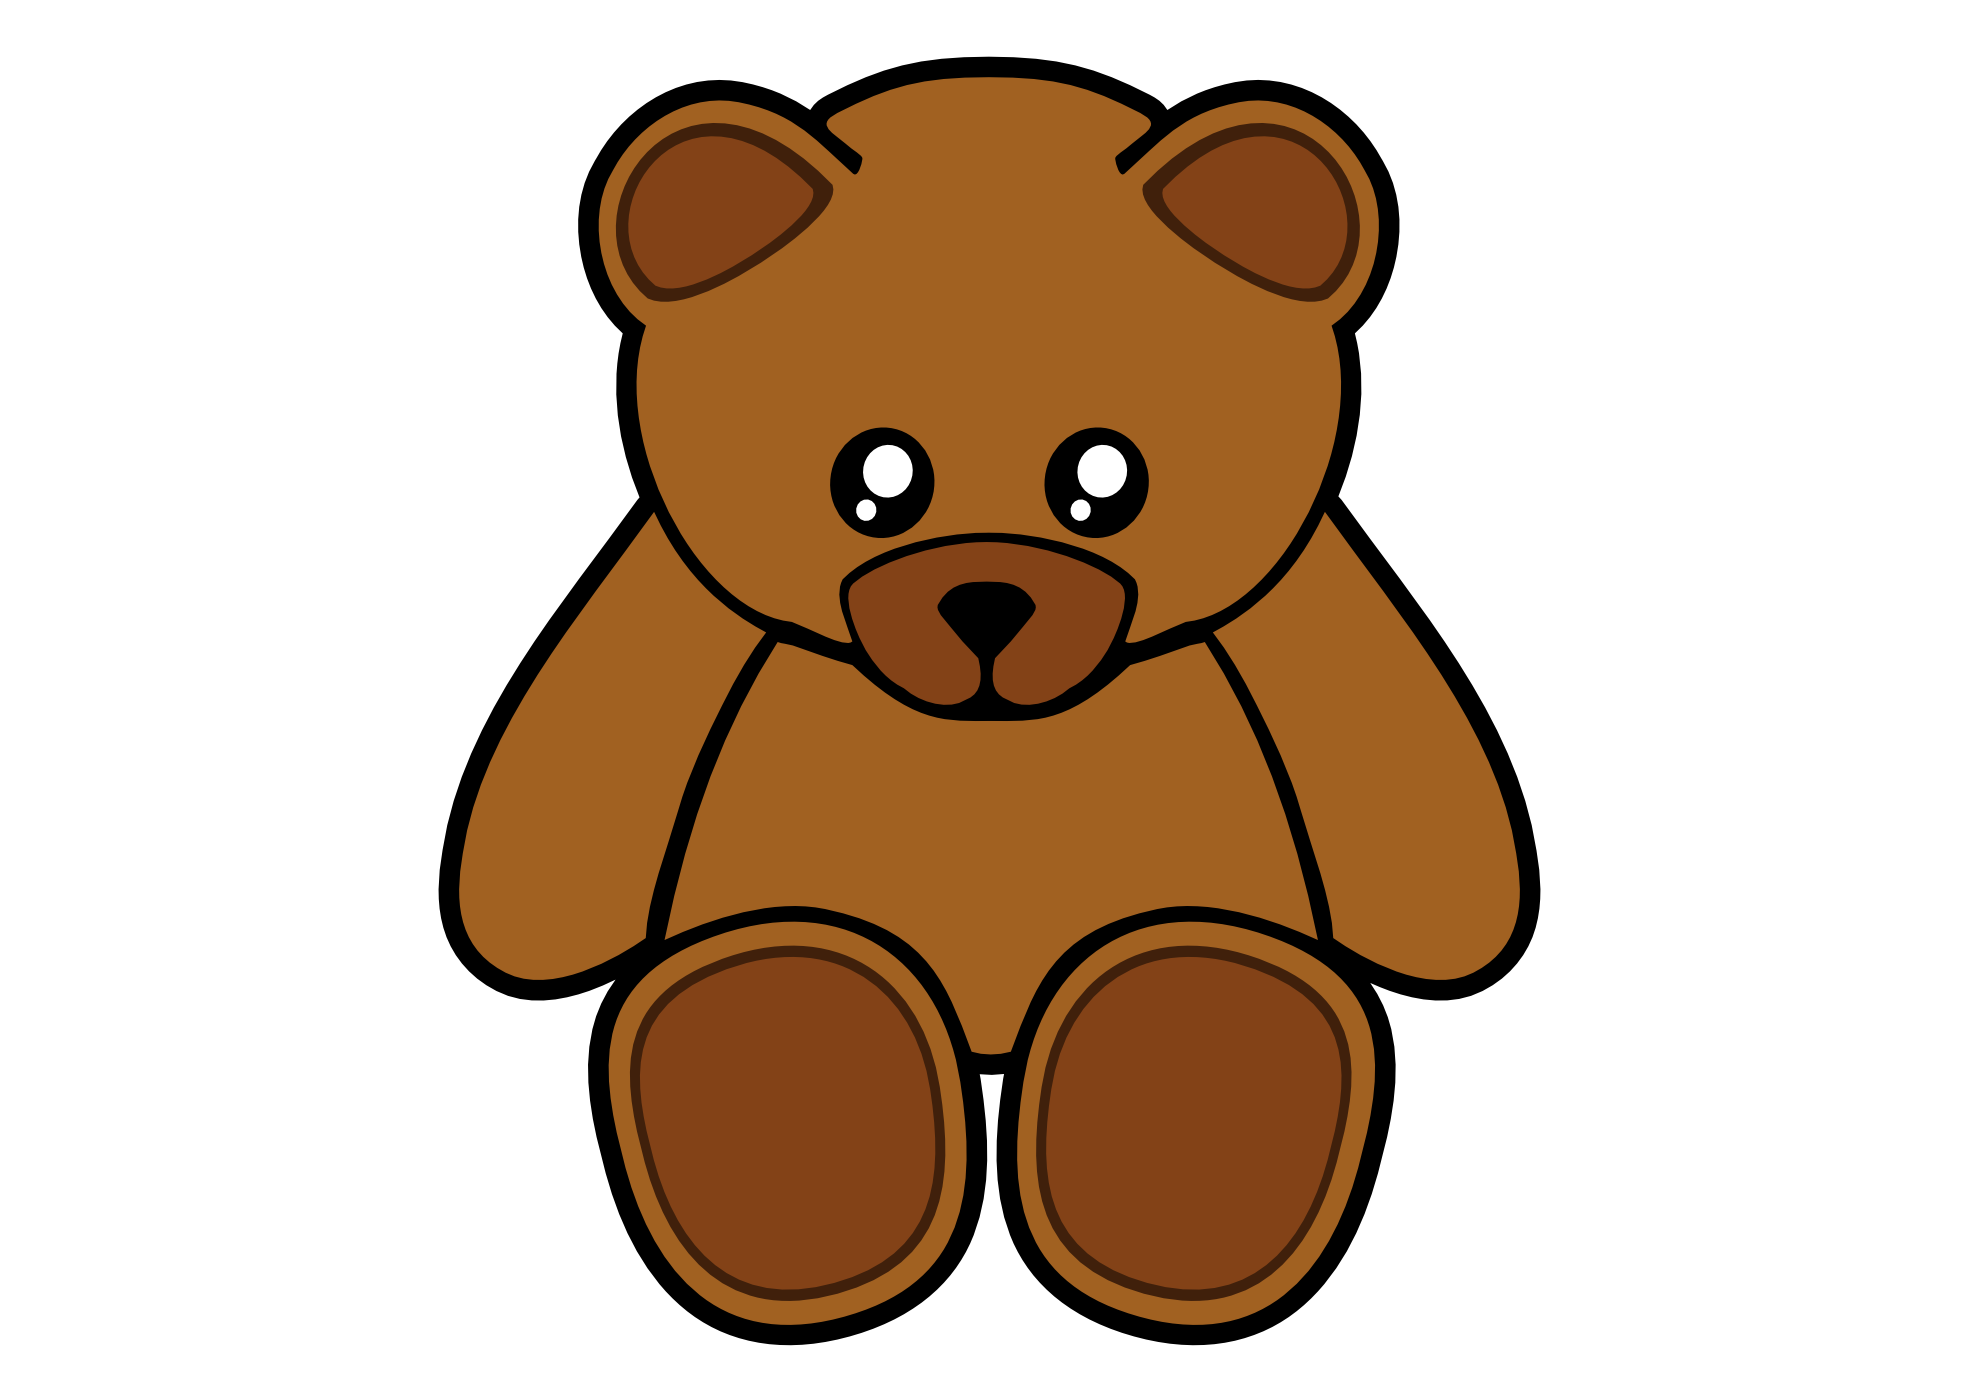 free clipart of teddy bear - photo #31